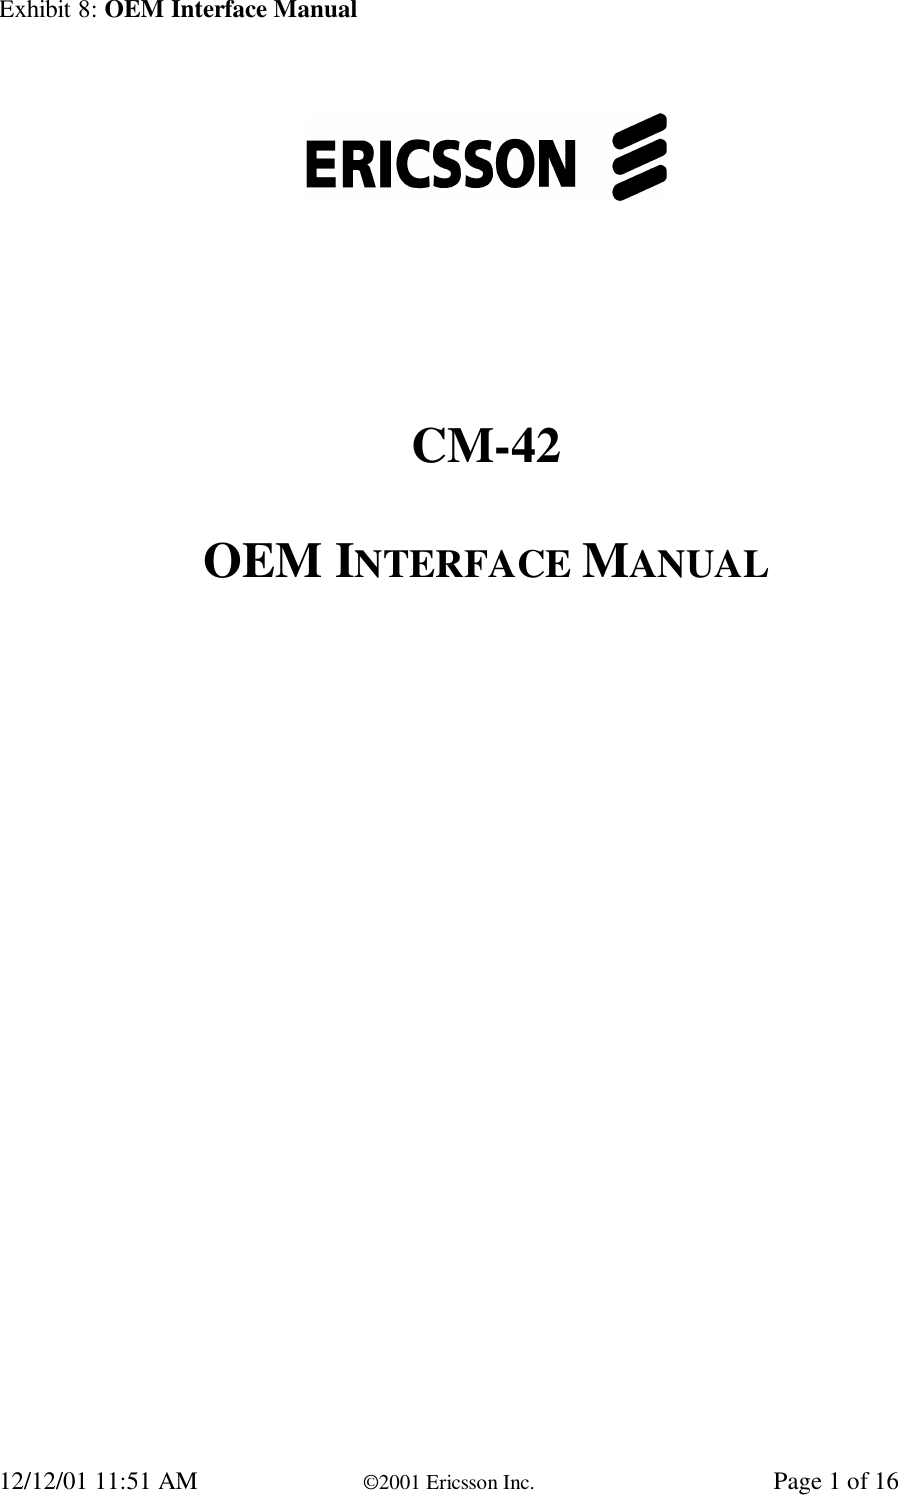 Exhibit 8: OEM Interface Manual12/12/01 11:51 AM ©2001 Ericsson Inc. Page 1 of 16CM-42OEM INTERFACE MANUAL